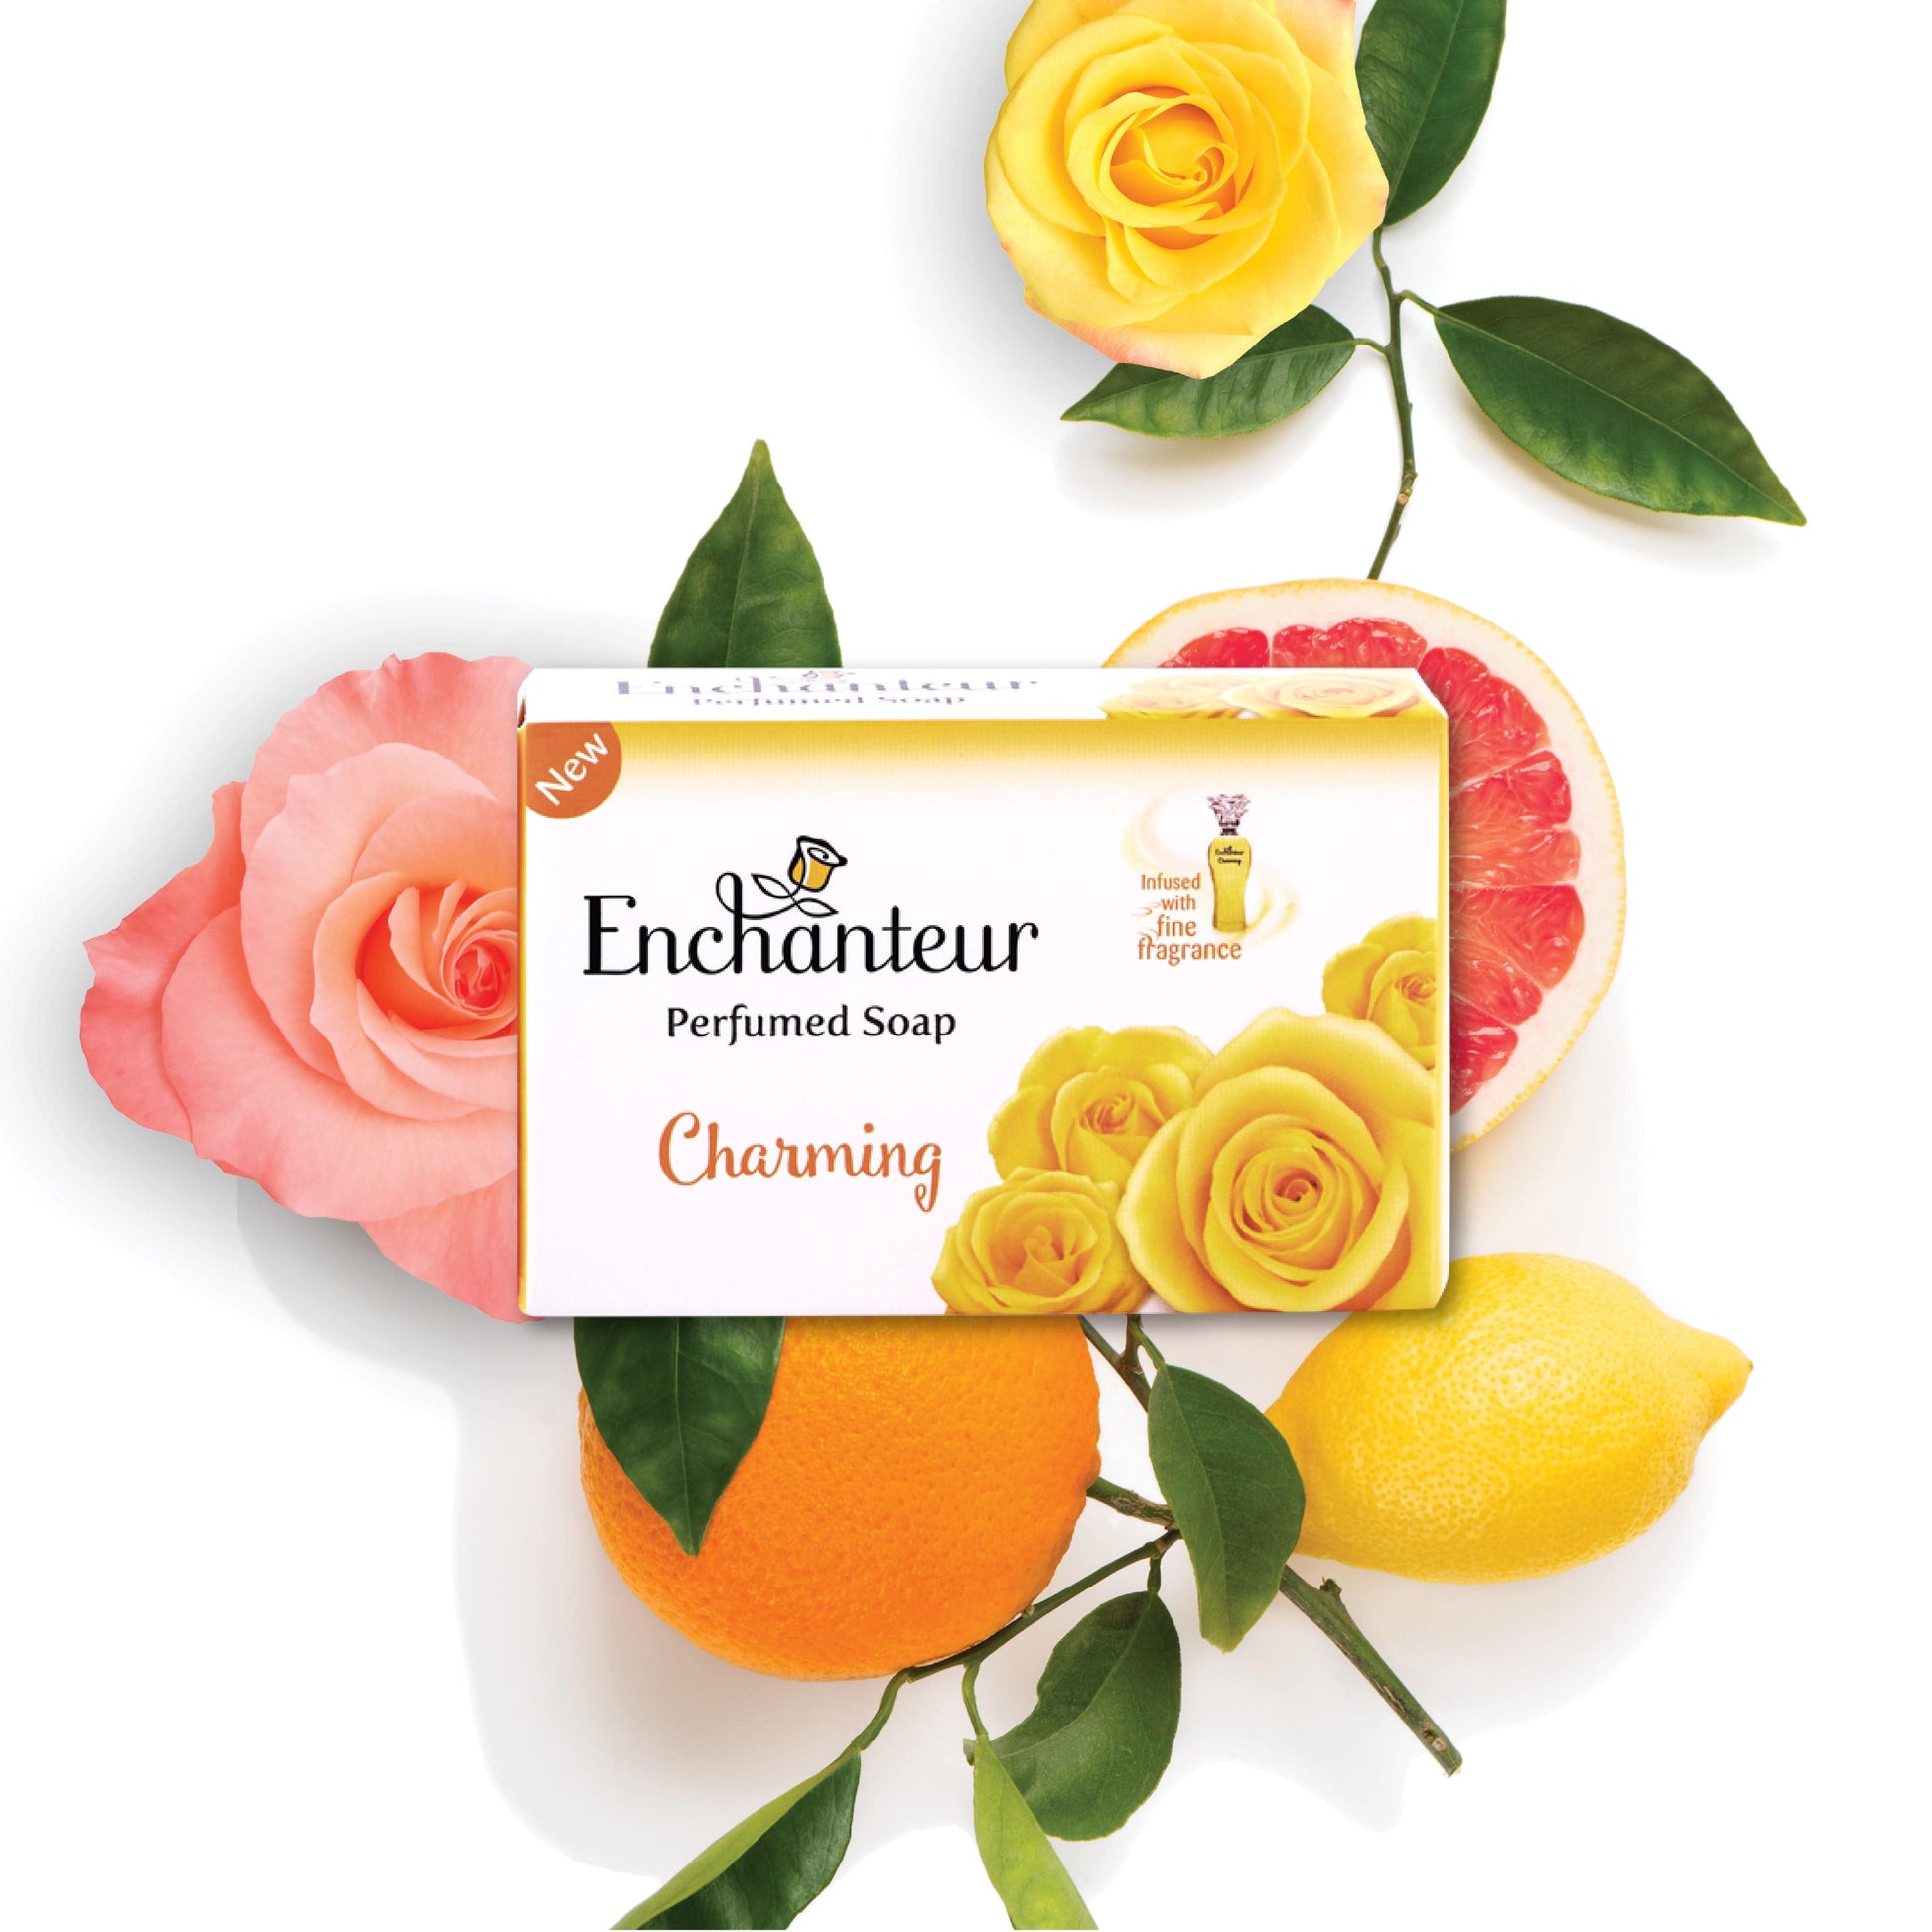 Enchanteur Perfumed Charming Bathing Bar, Pack of 3+1 By Enchanteur